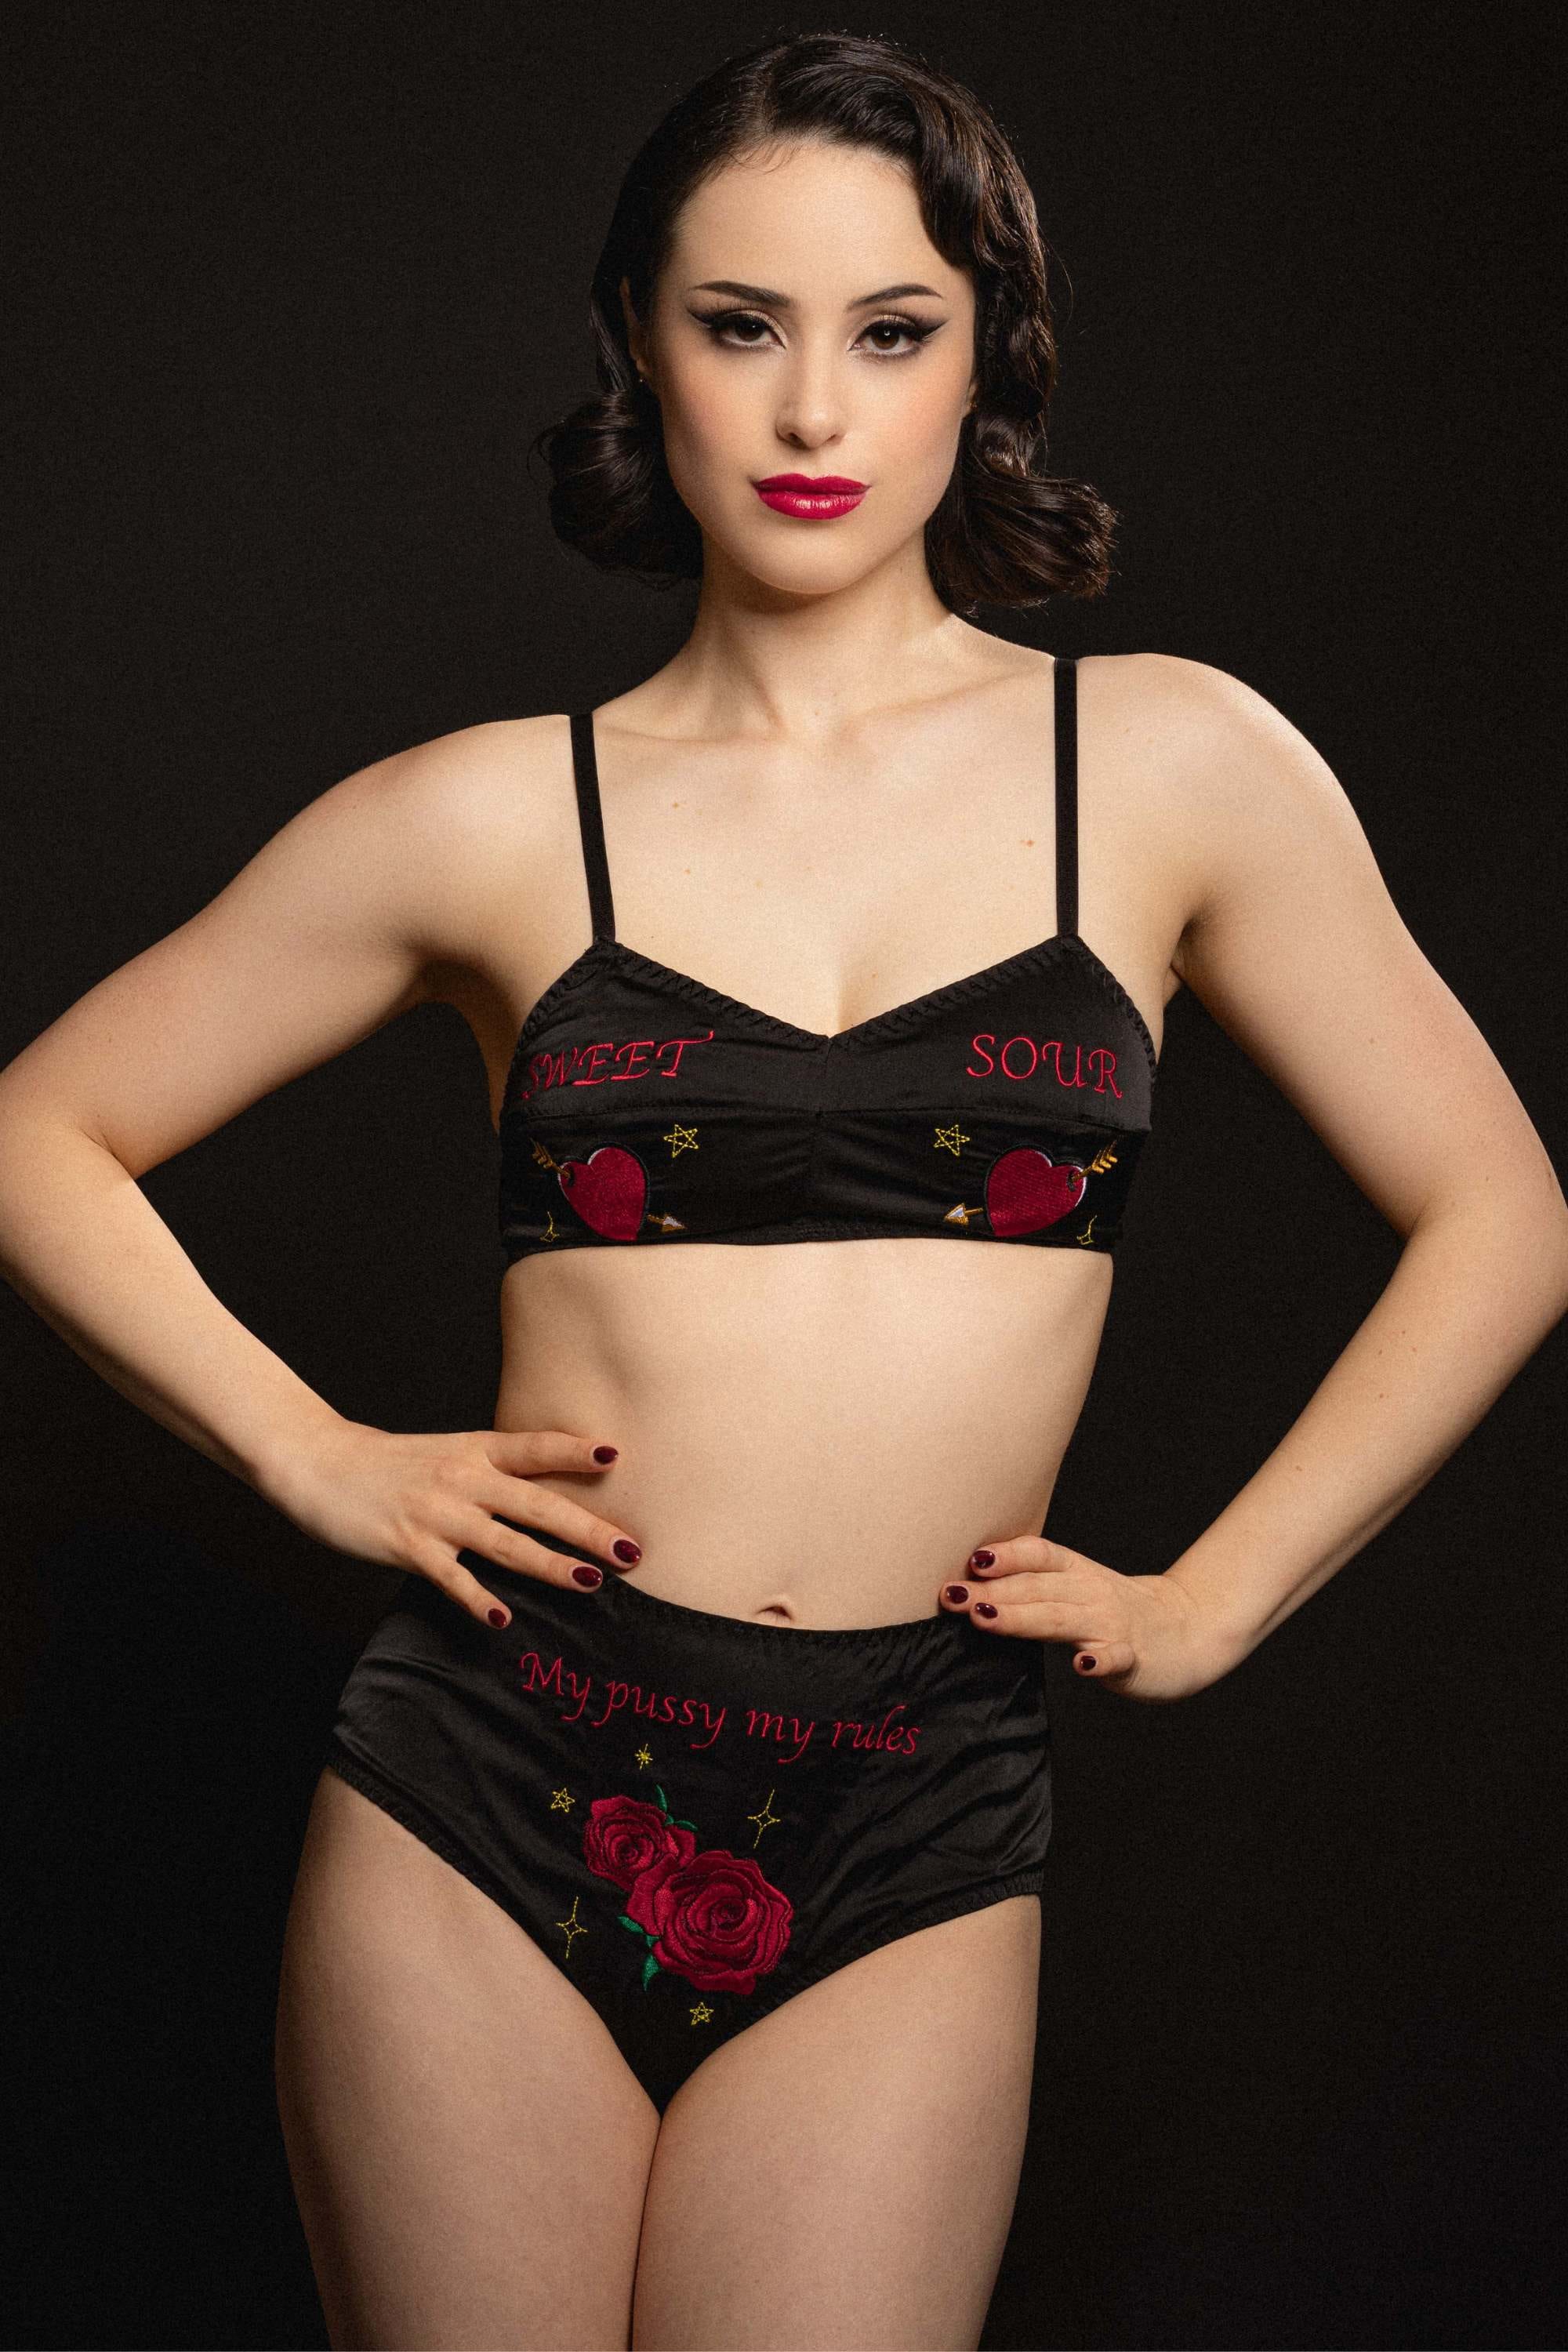 model wears black satin retro embroidery lingerie set